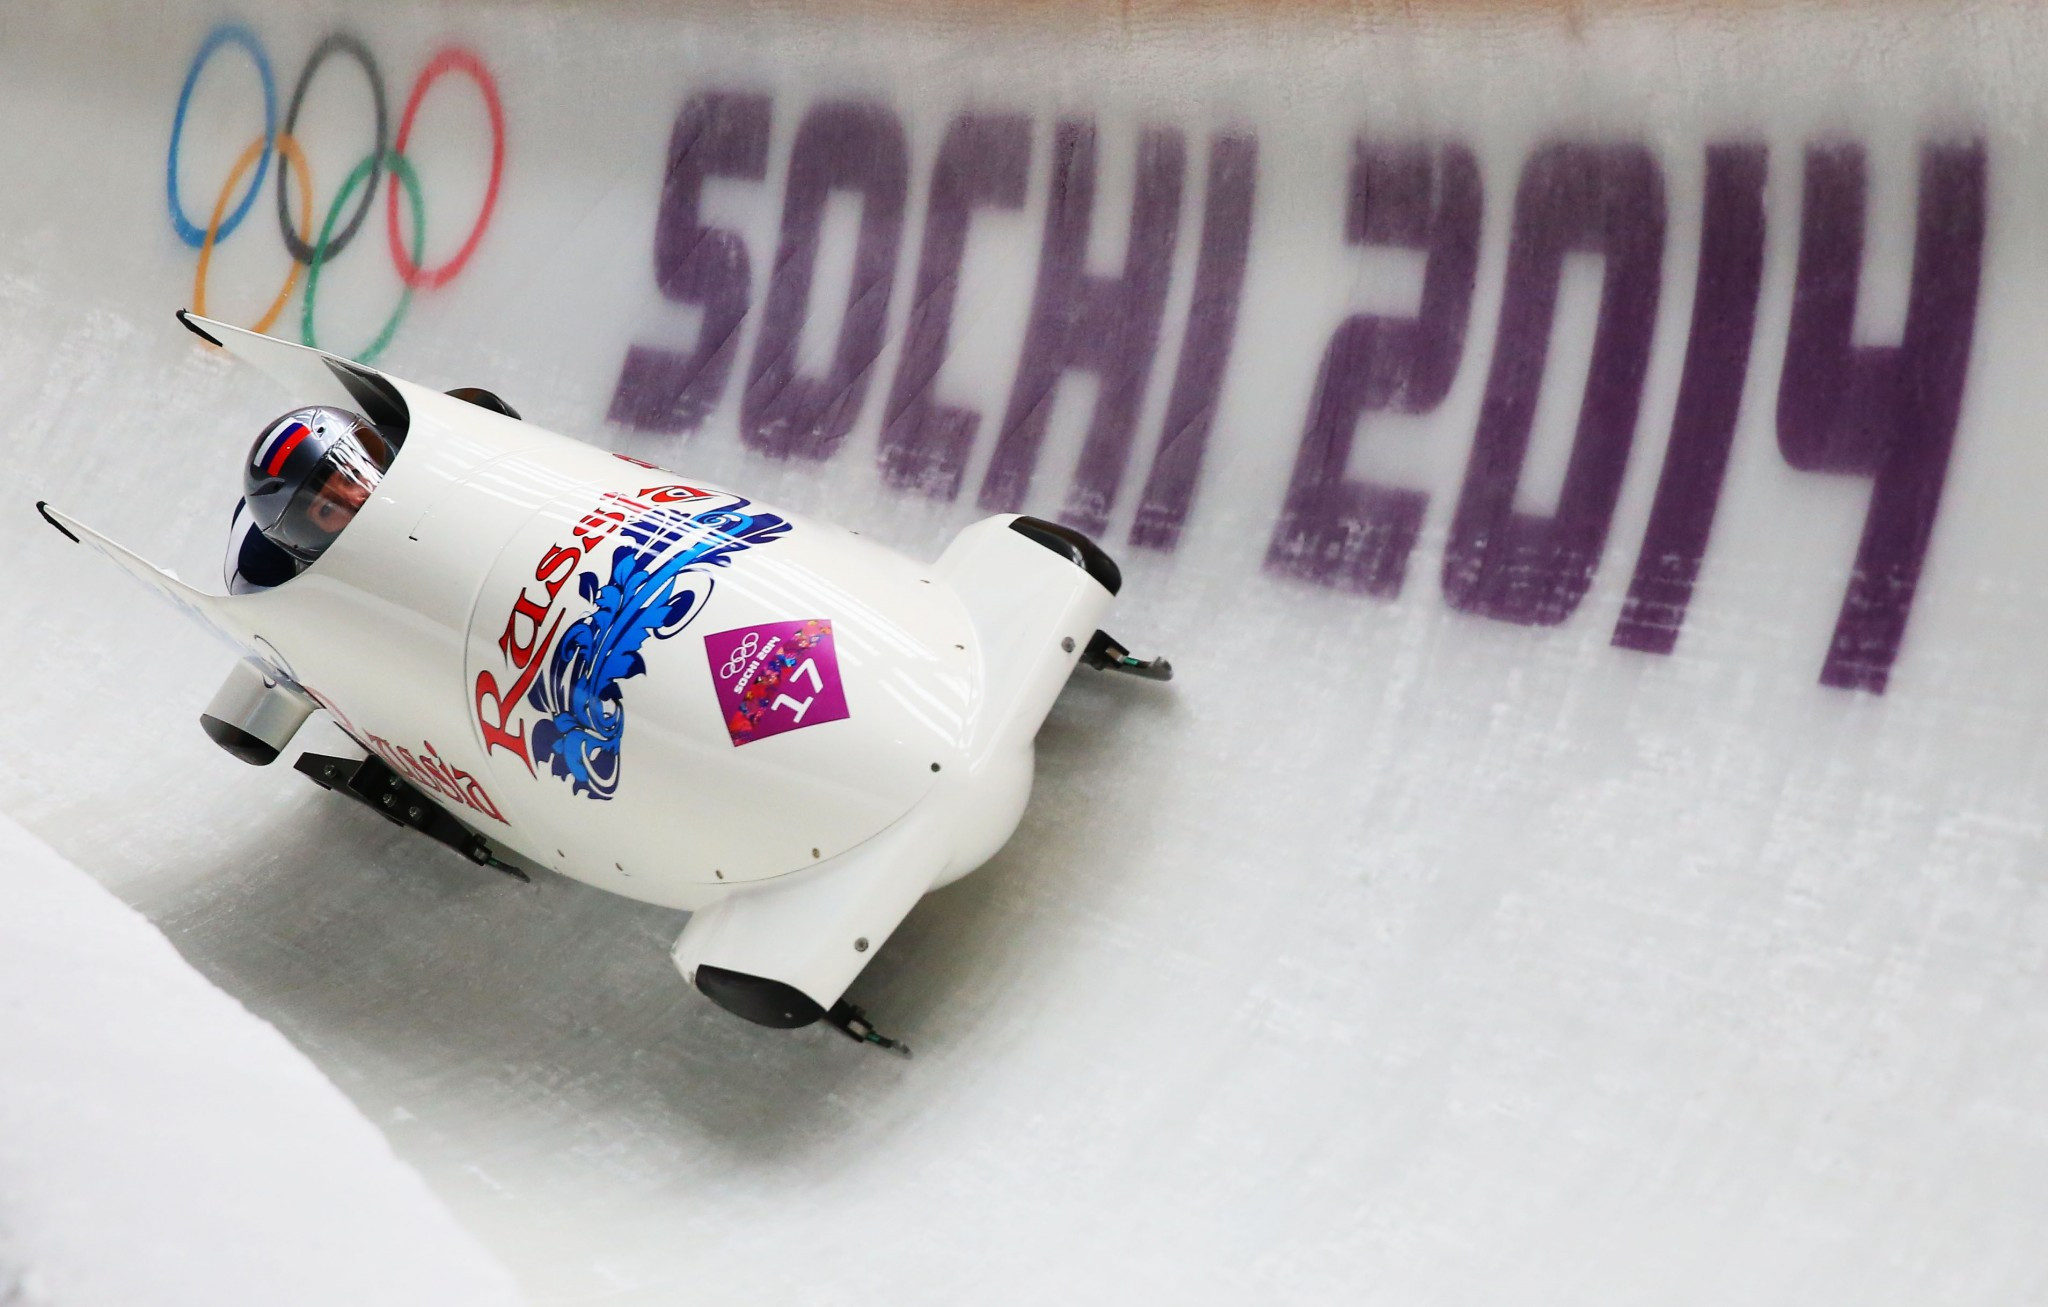 Nadezhda Paleeva finished 16th at Sochi 2014 with Nadezhda Sergeeva ©Getty Images